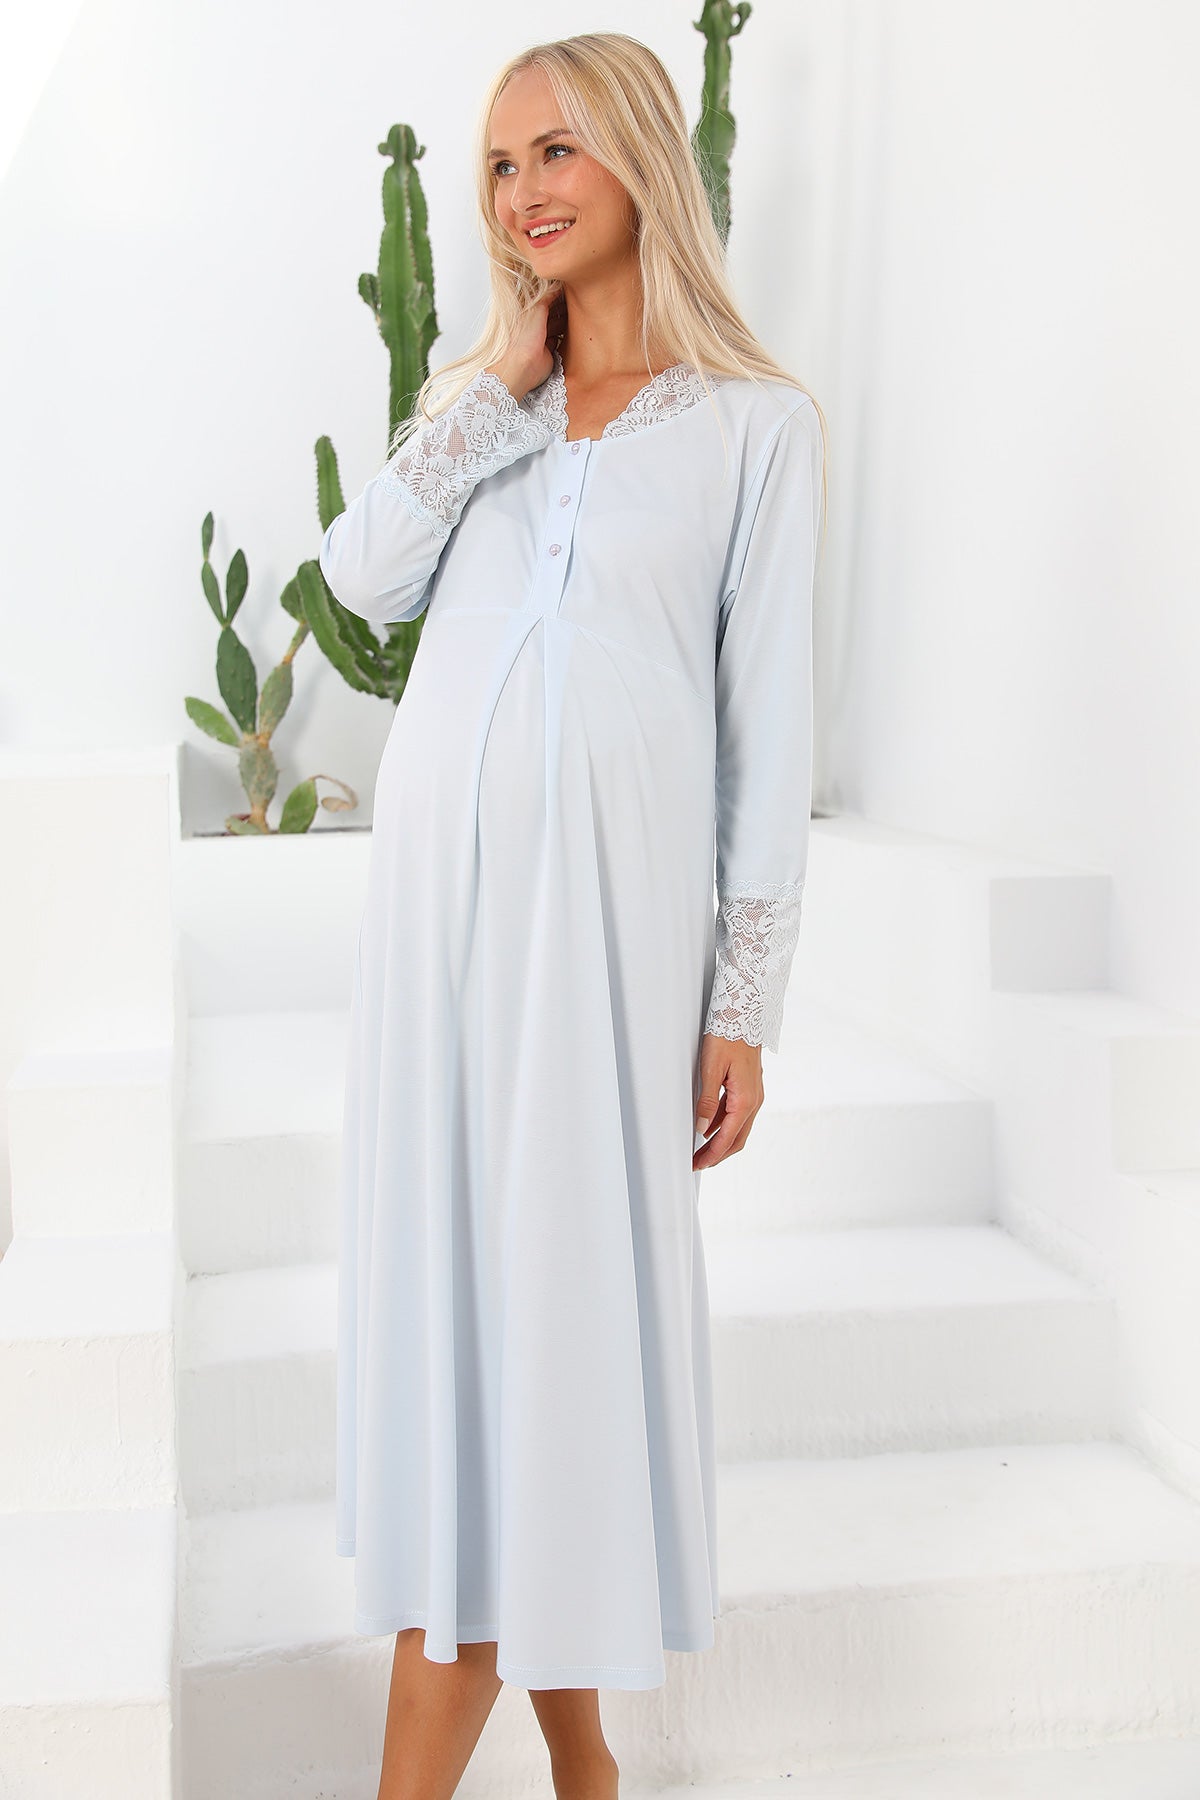 Shopymommy 55104 Dream Lace Collar Maternity & Nursing Nightgown Blue